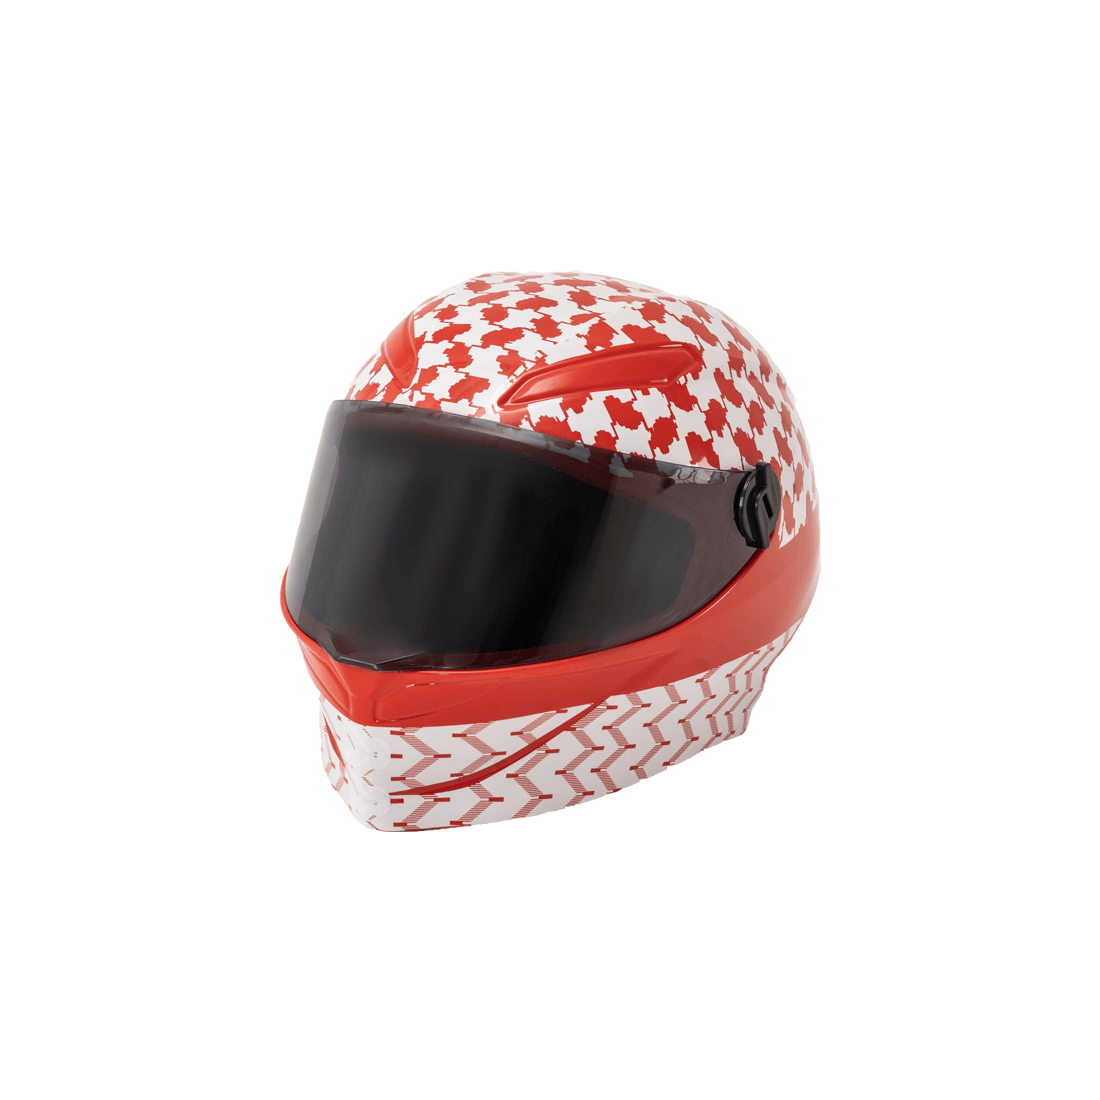 Mini Helmet - Red & White - خوذة - Store 974 | ستور ٩٧٤